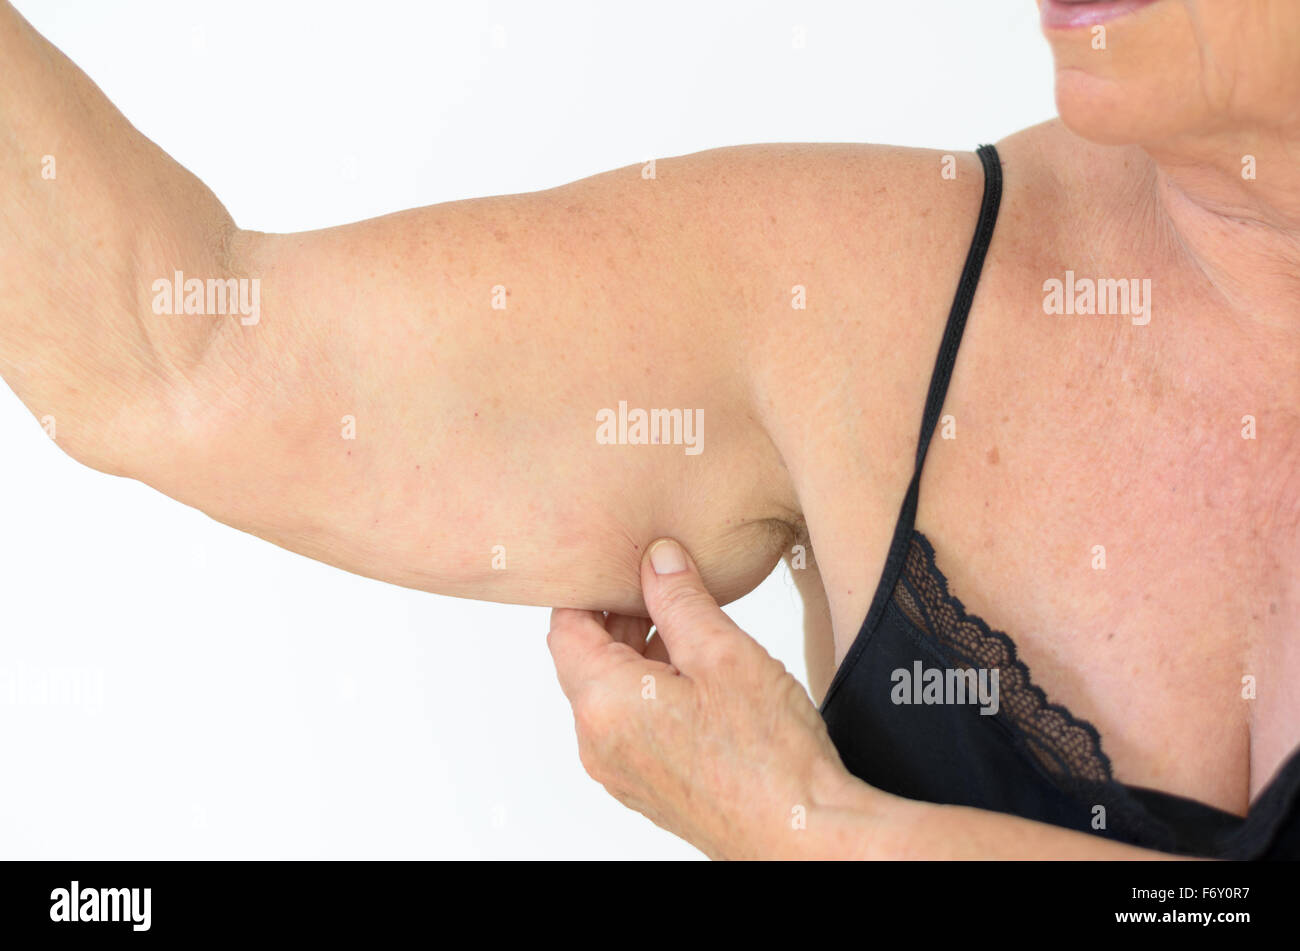 https://c8.alamy.com/comp/F6Y0R7/senior-woman-wearing-black-laced-bra-while-showing-flabby-arm-effect-F6Y0R7.jpg